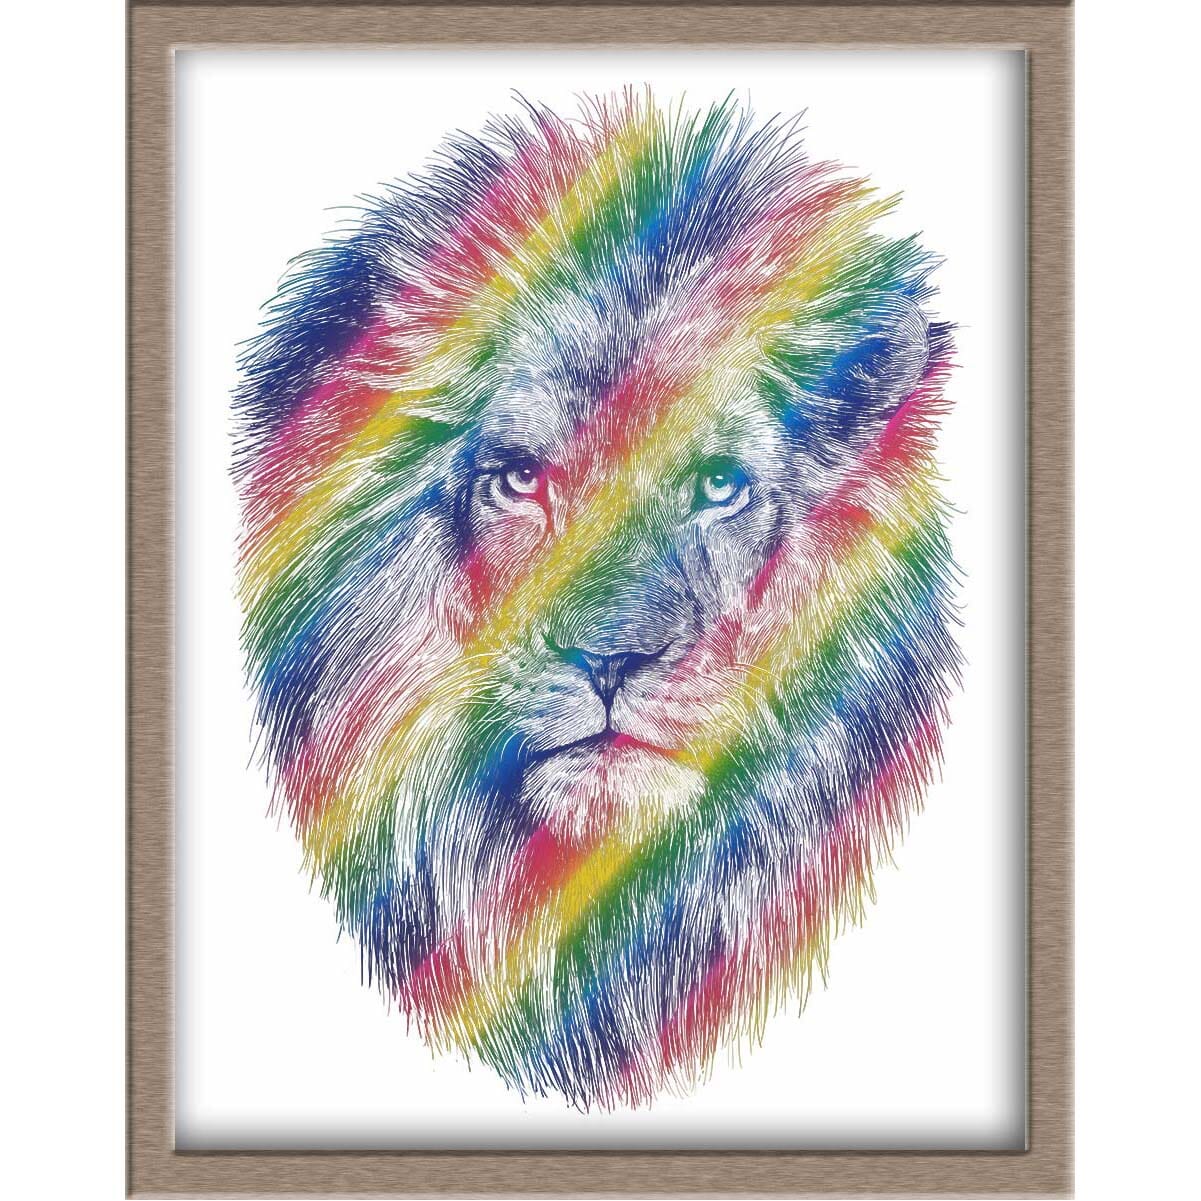 Lion Foiled Print Posters, Prints, & Visual Artwork JoyousJoyfulJoyness 